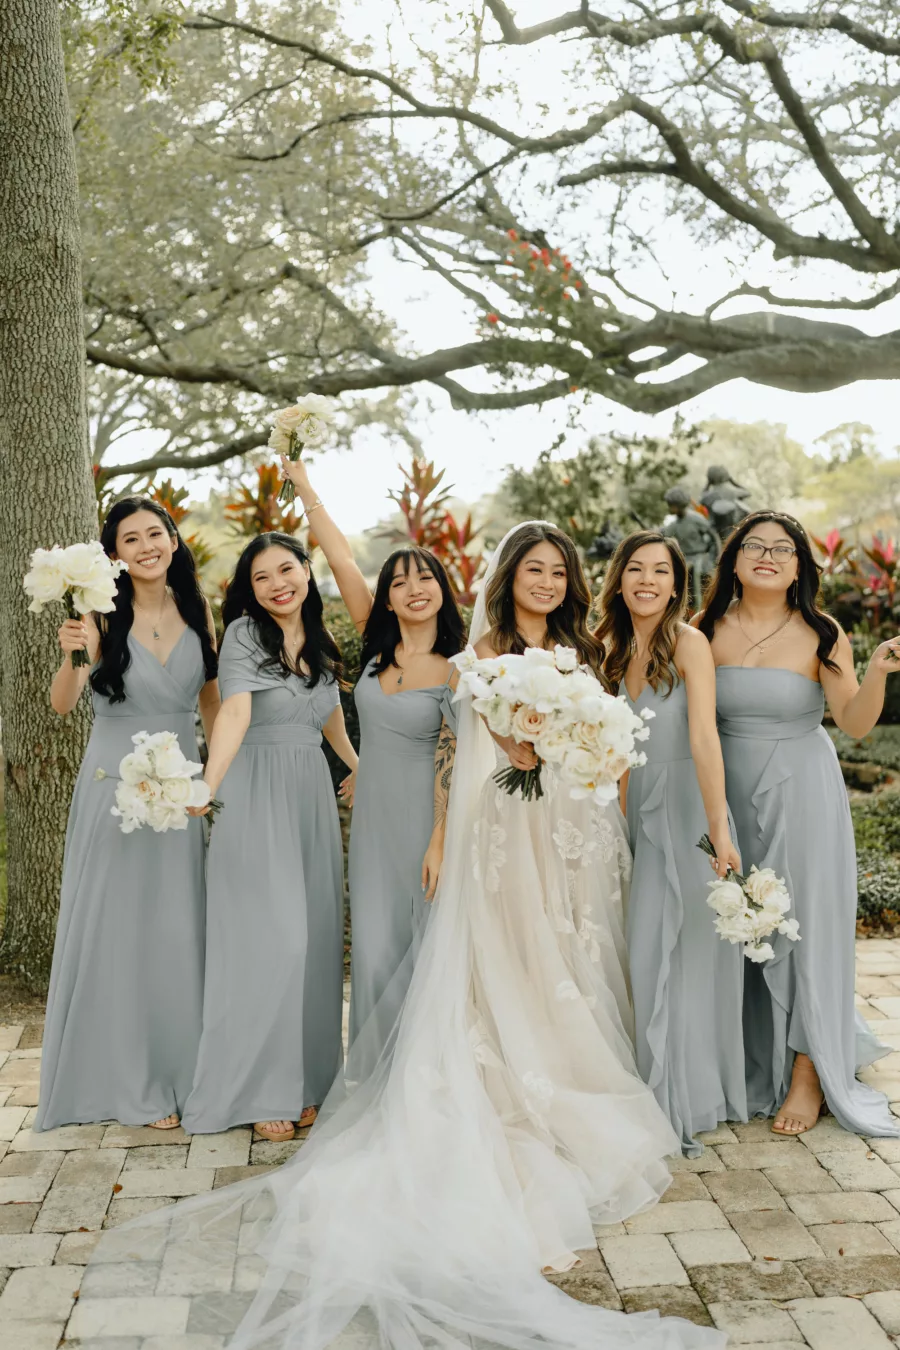 Sage Green Bridesmaid Dress Ideas | | Ivory Strapless Lace A-Line Wedding Dress Inspiration | Tampa Bay Florist Bloom Shakalaka | Lakeland Photographer and Videographer J&S Media